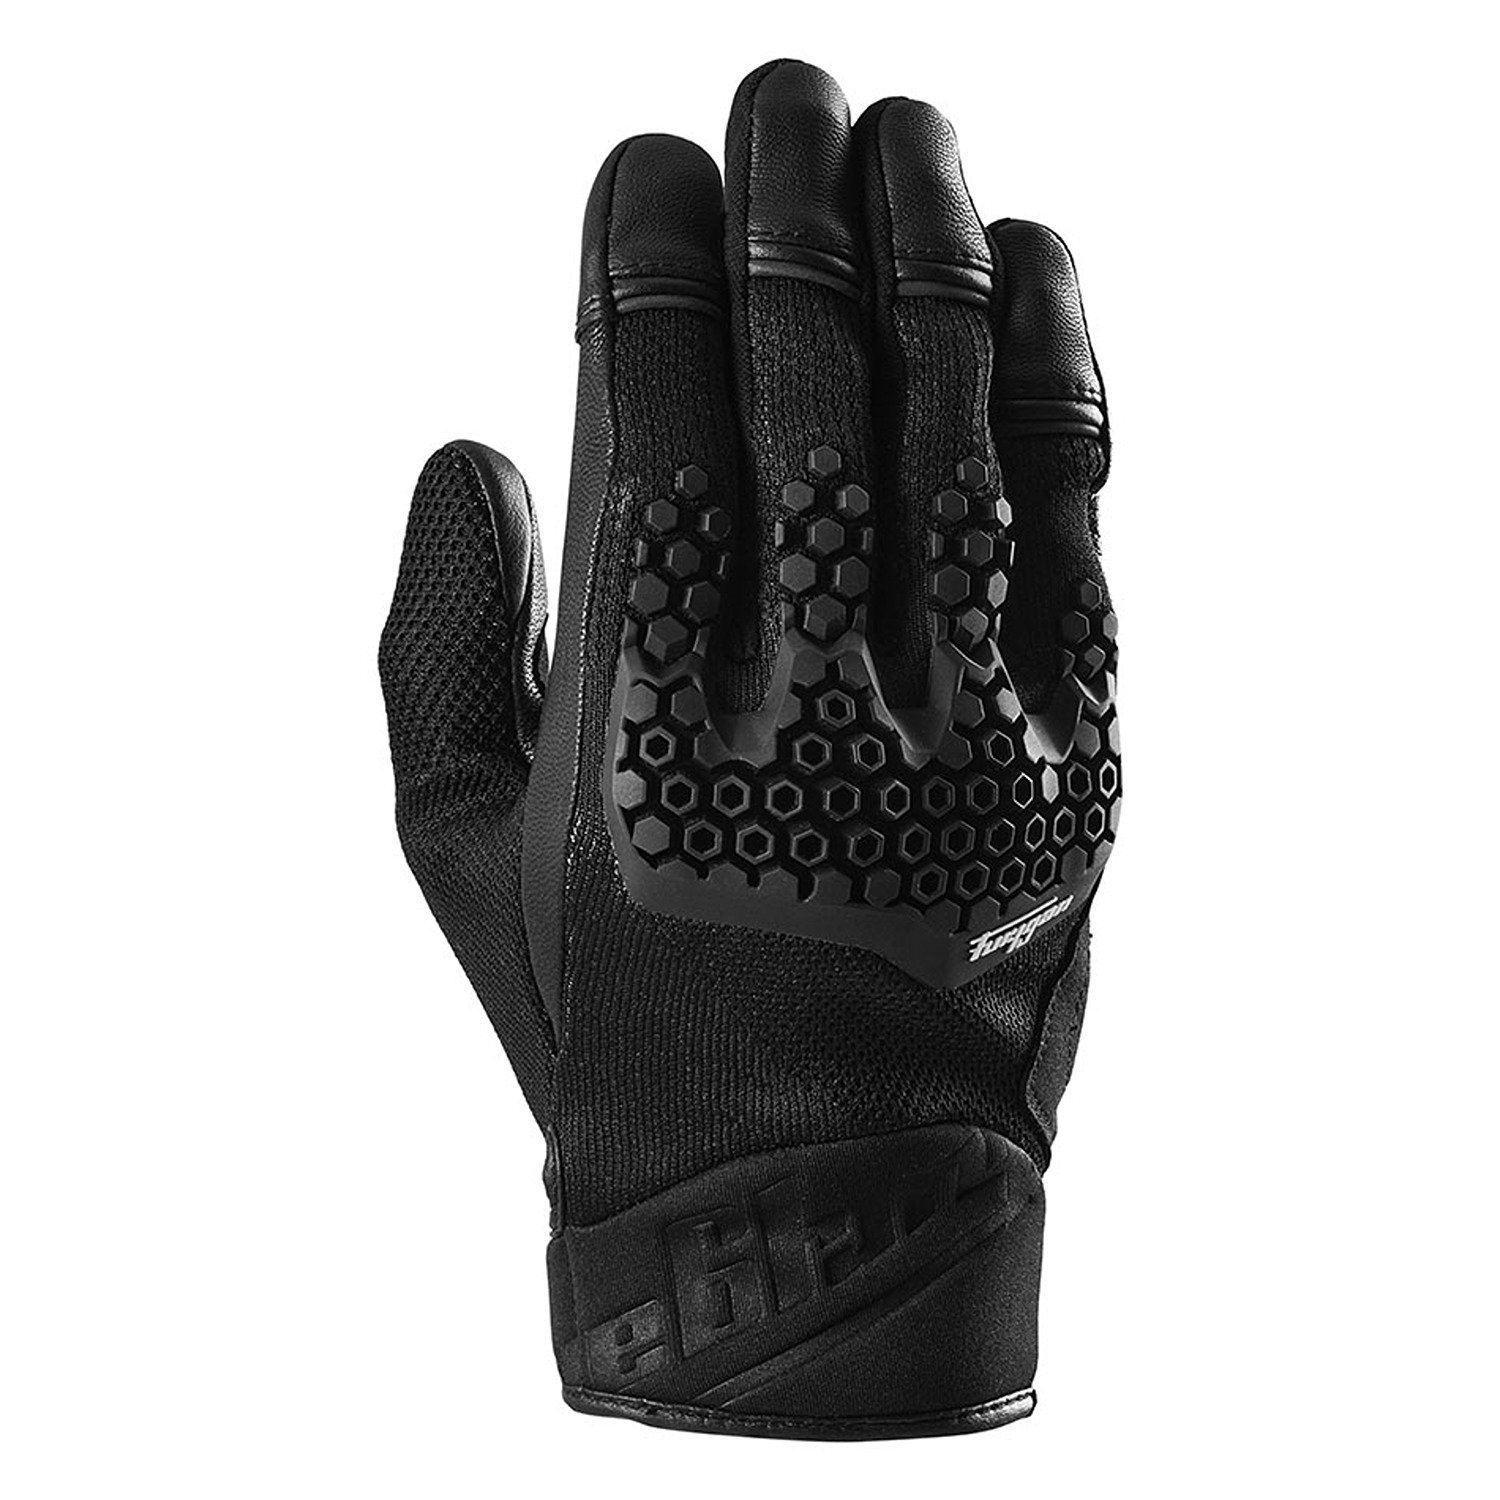 Image of Furygan Jack Gloves Black Size 2XL ID 3435980383572